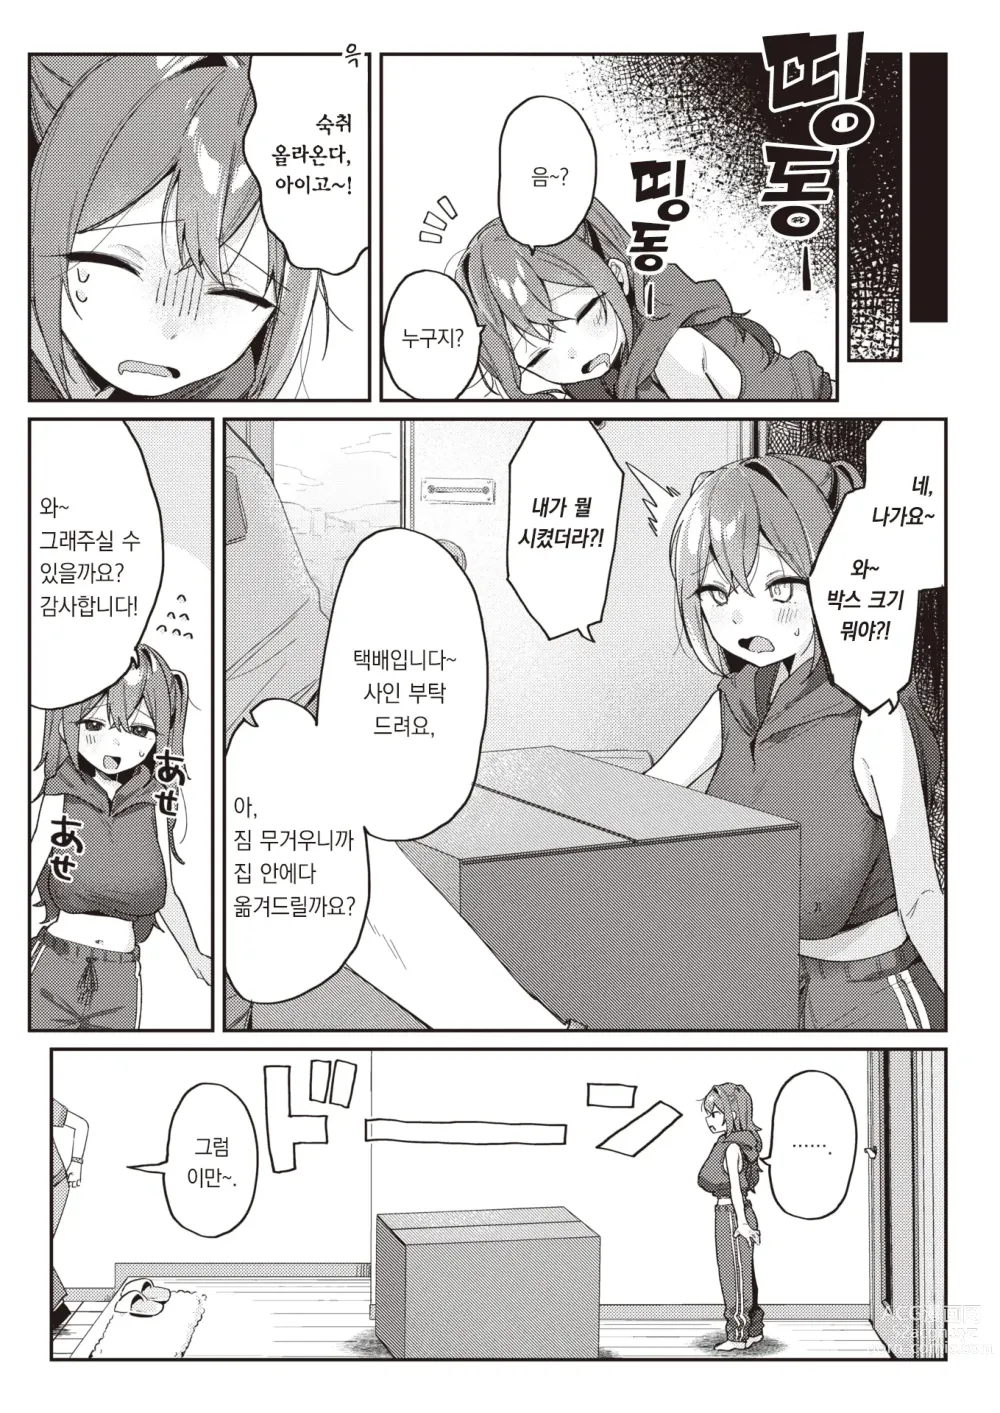 Page 4 of manga AI 딜도가 도착했다!